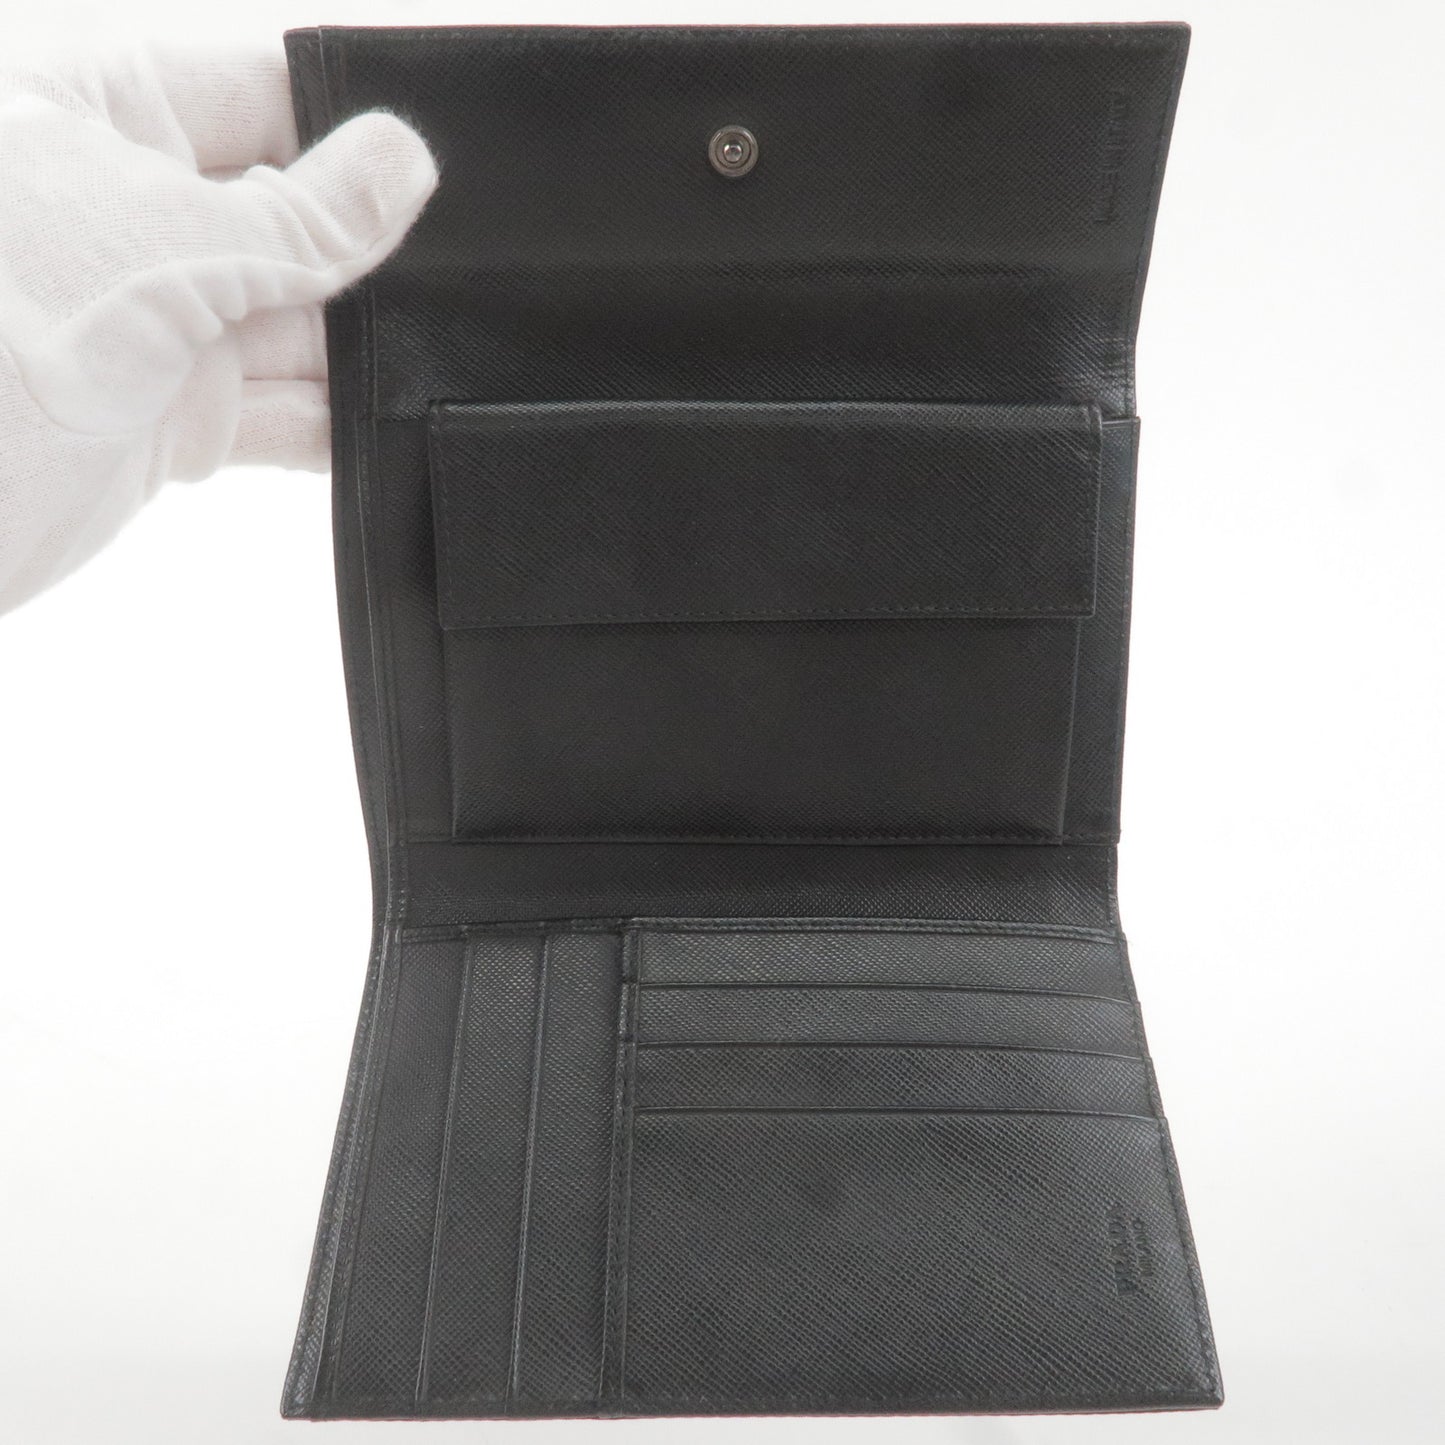 PRADA Nylon Tri Fold Wallet NERO Black